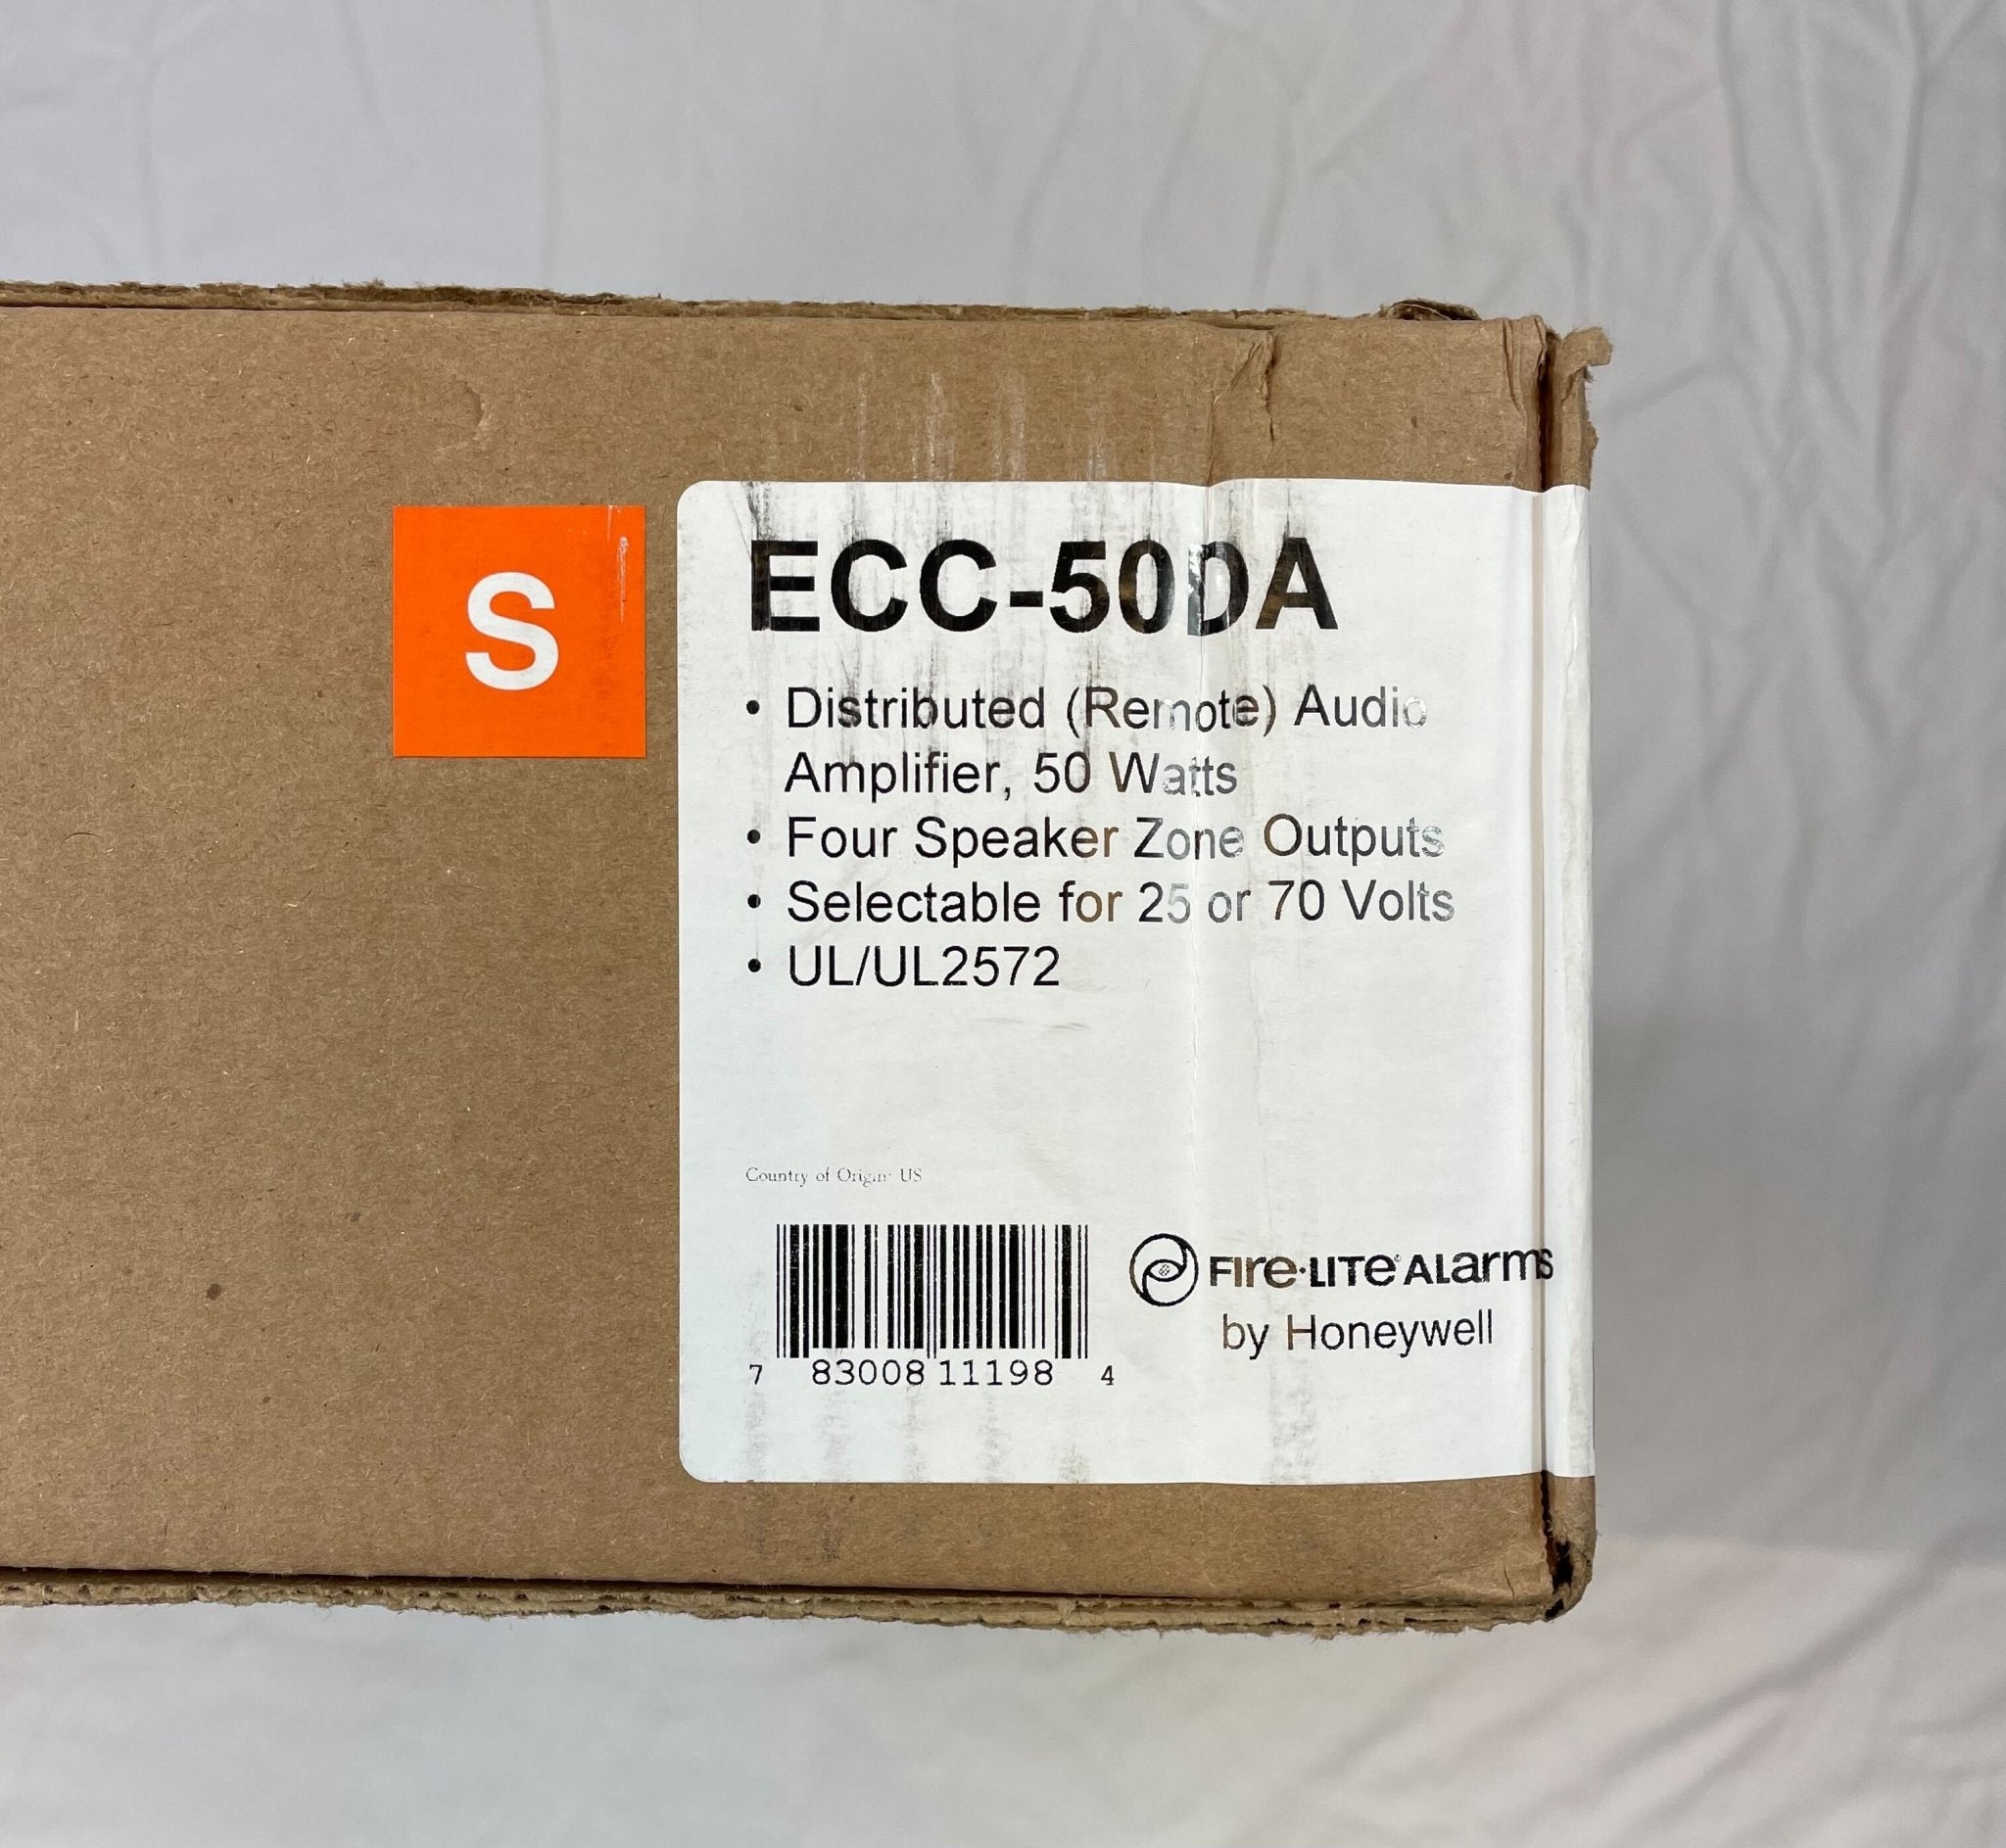 Firelite ECC-50DA - The Fire Alarm Supplier